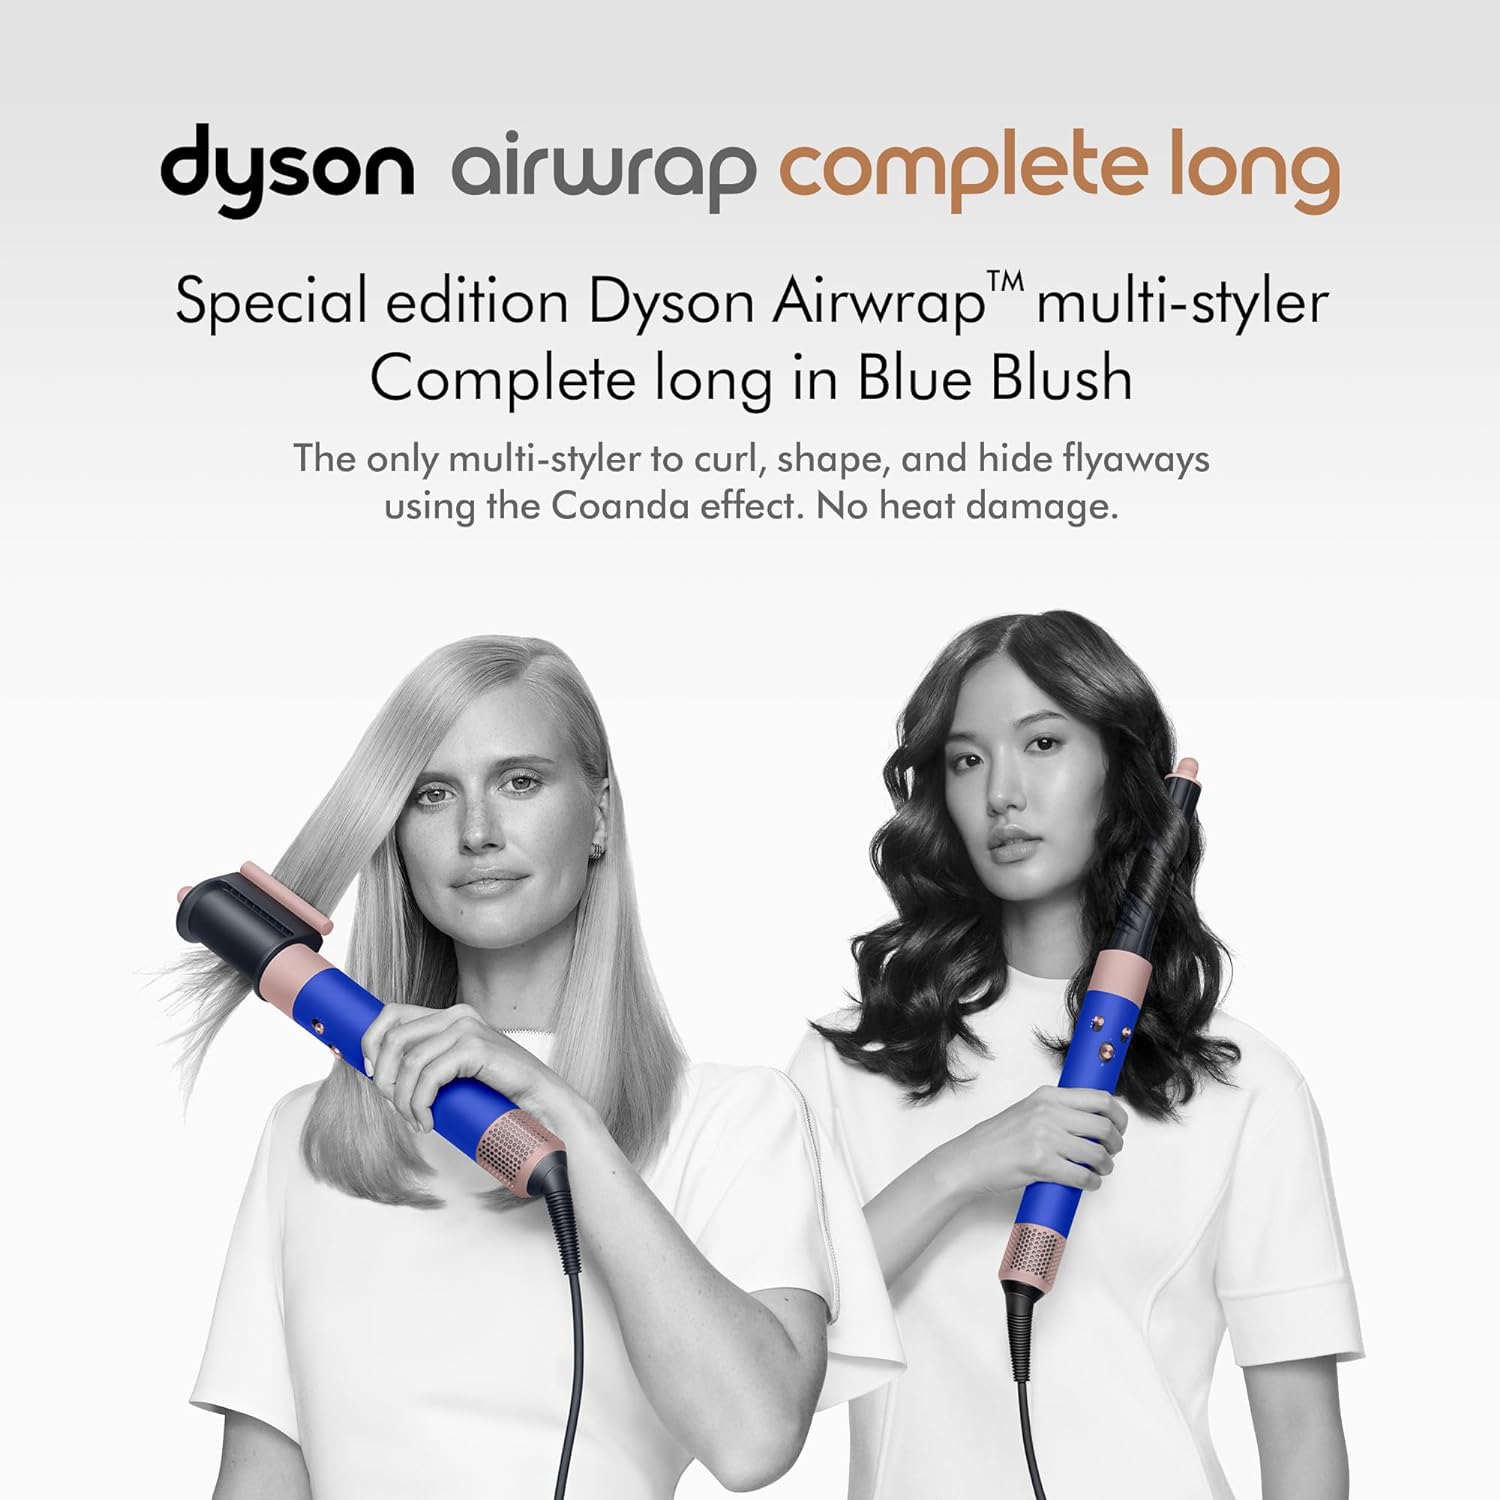 Dyson Airwrap Multi-Styler Complete Long, 3 Temperature Settings, 1300W Power, 8.5 ft Cable Length, 13.5 l/s Air Flow, Blue Blush